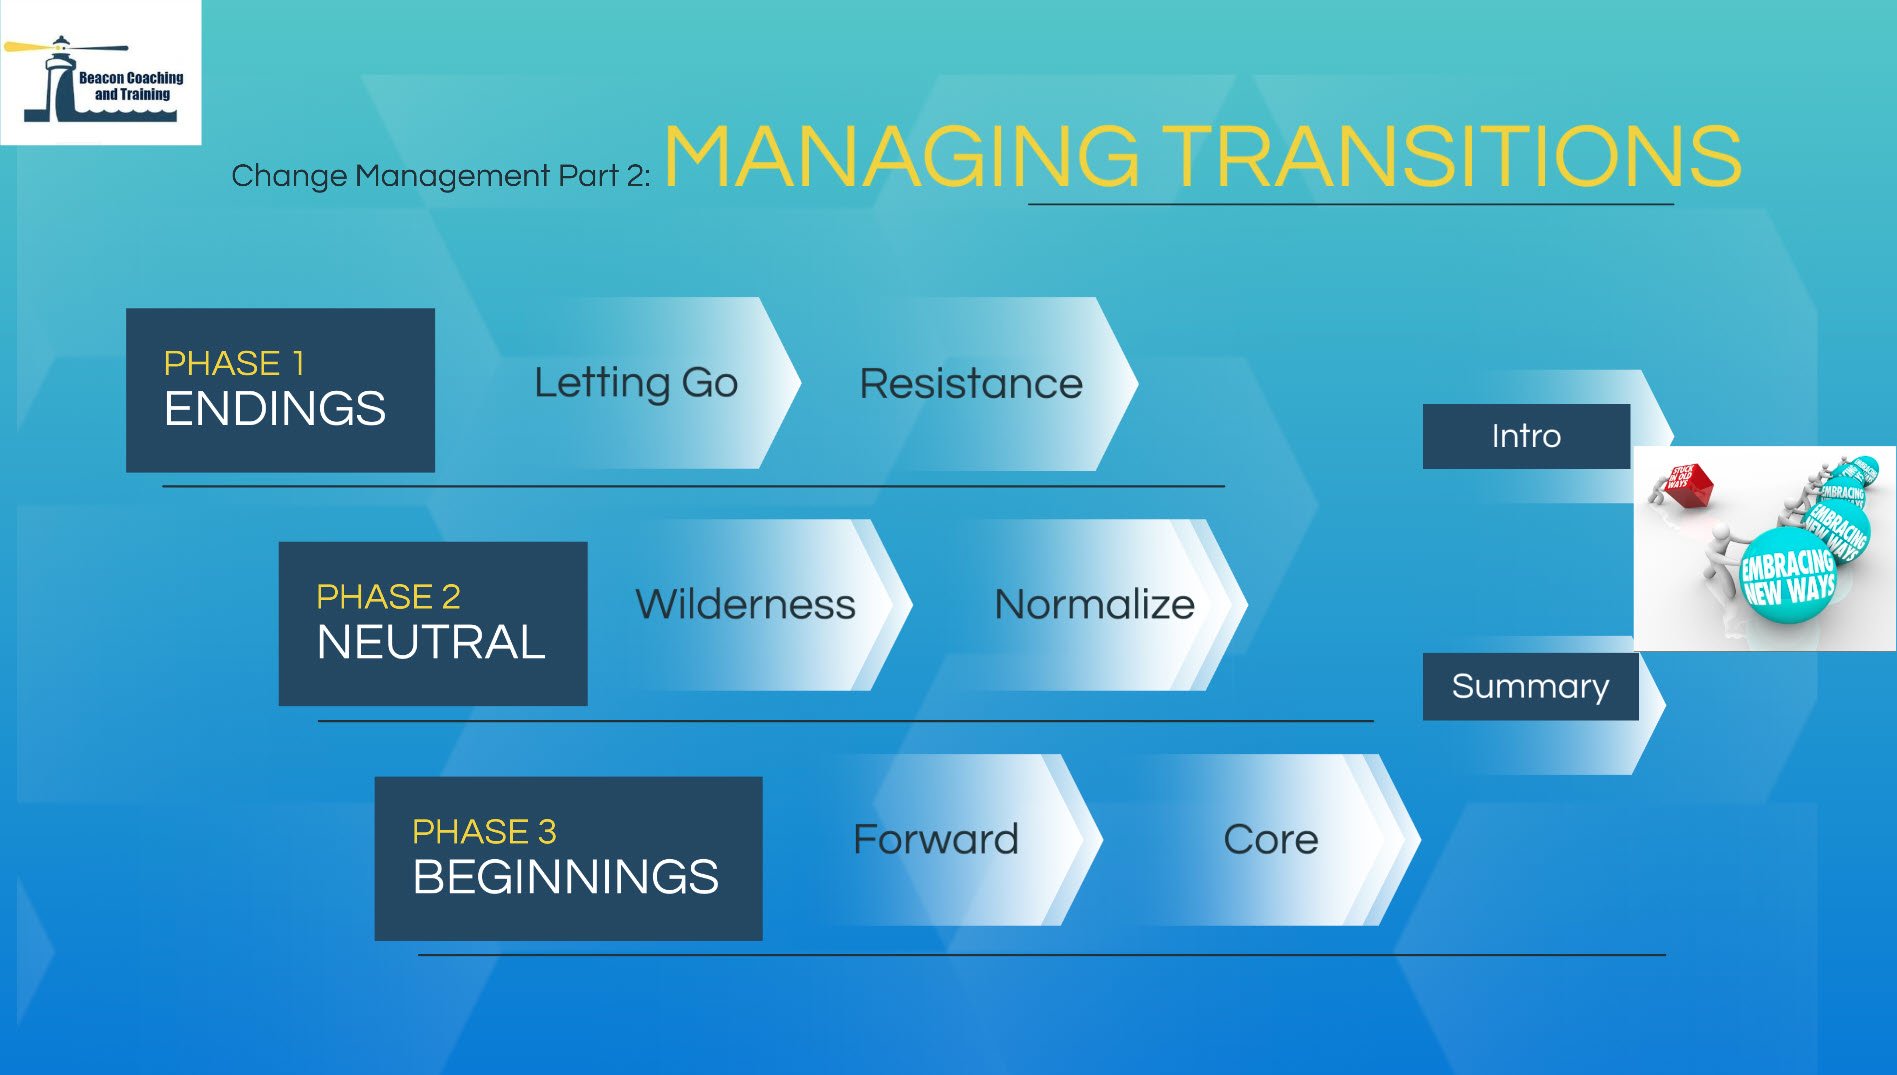 Change Management Part 2: Managing Transitions eCourse